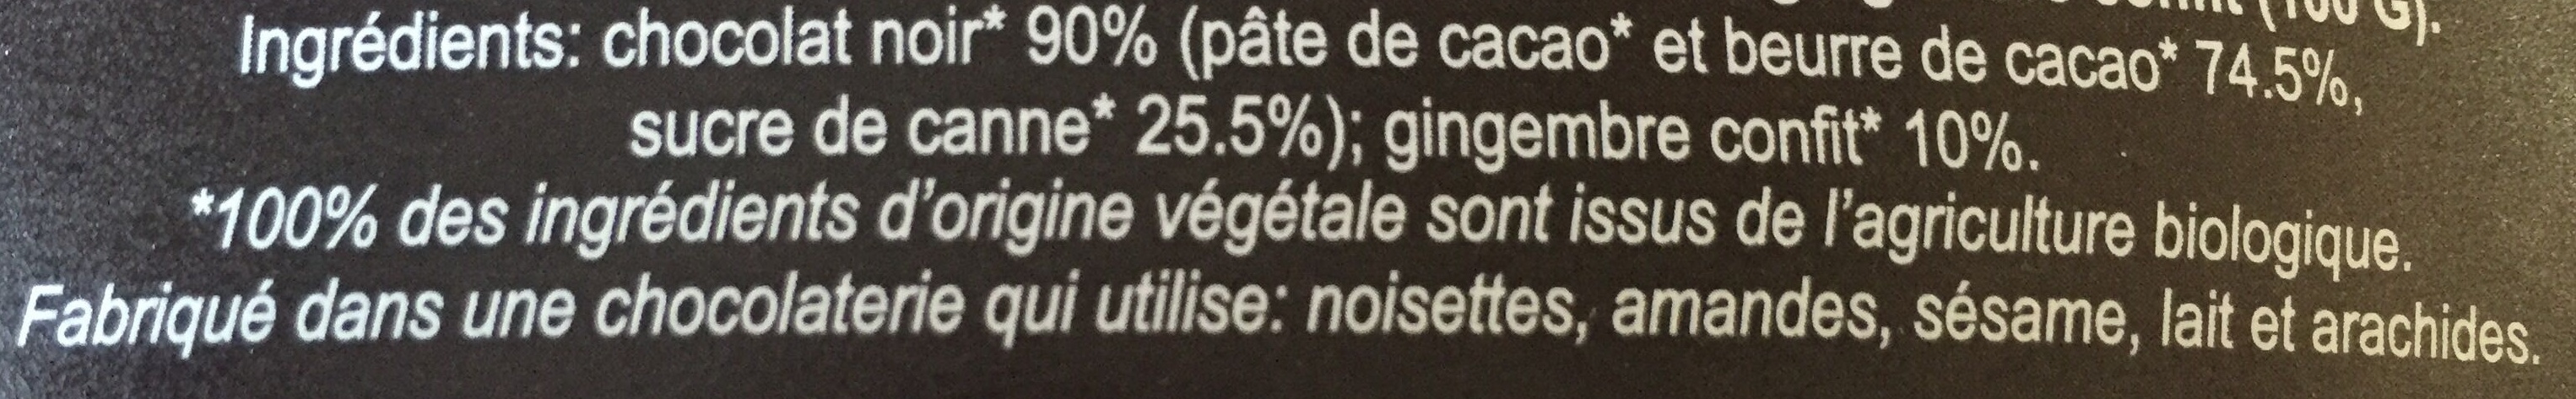 Chocolat 70% gingembre confit - Ingredients - fr